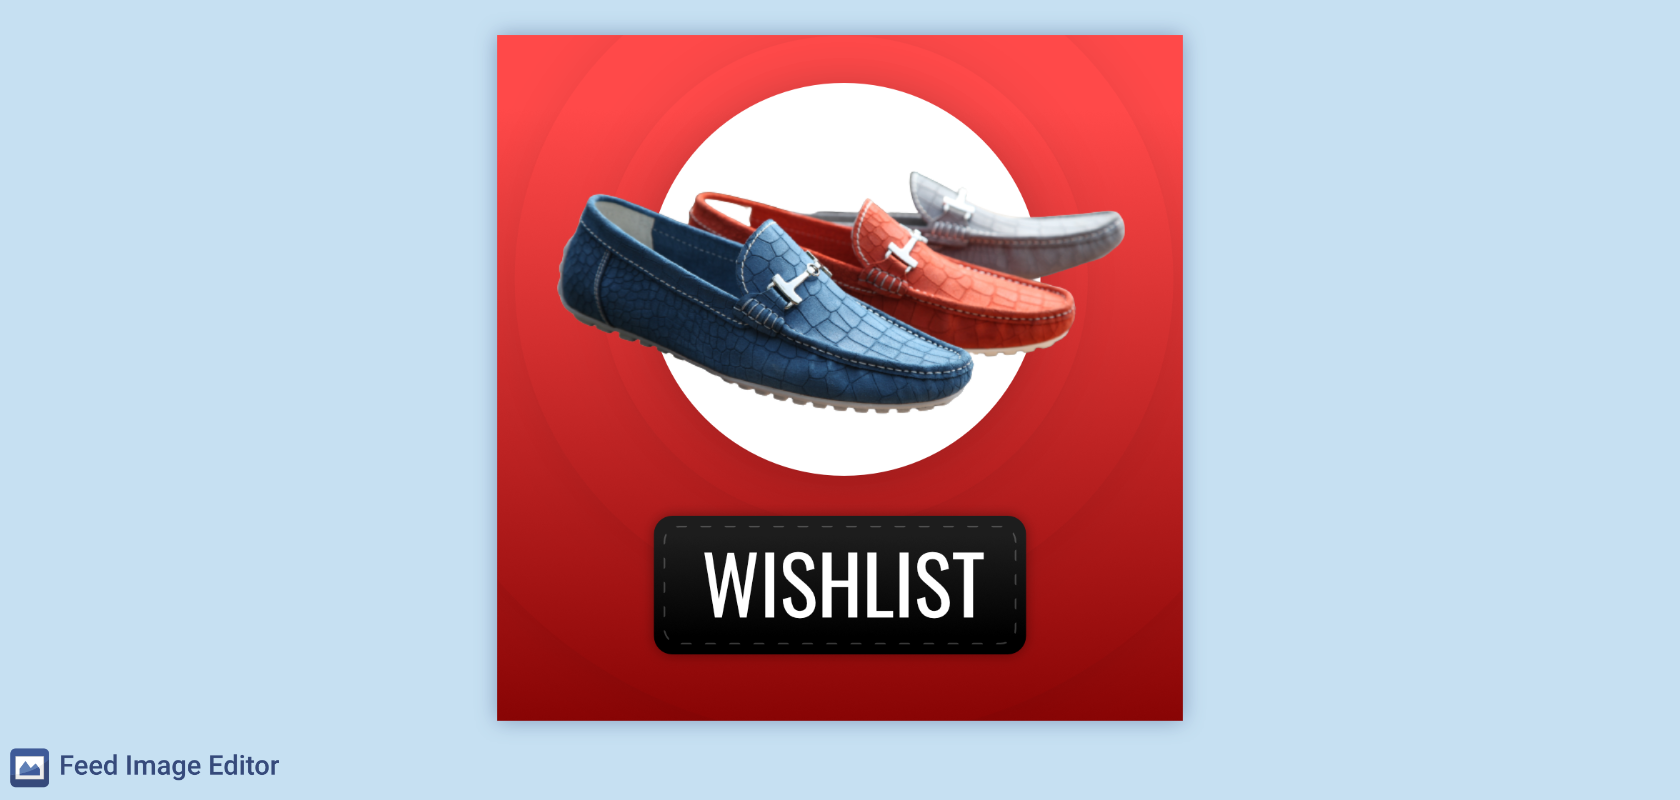 CTA_wishlist_shoes_advertising